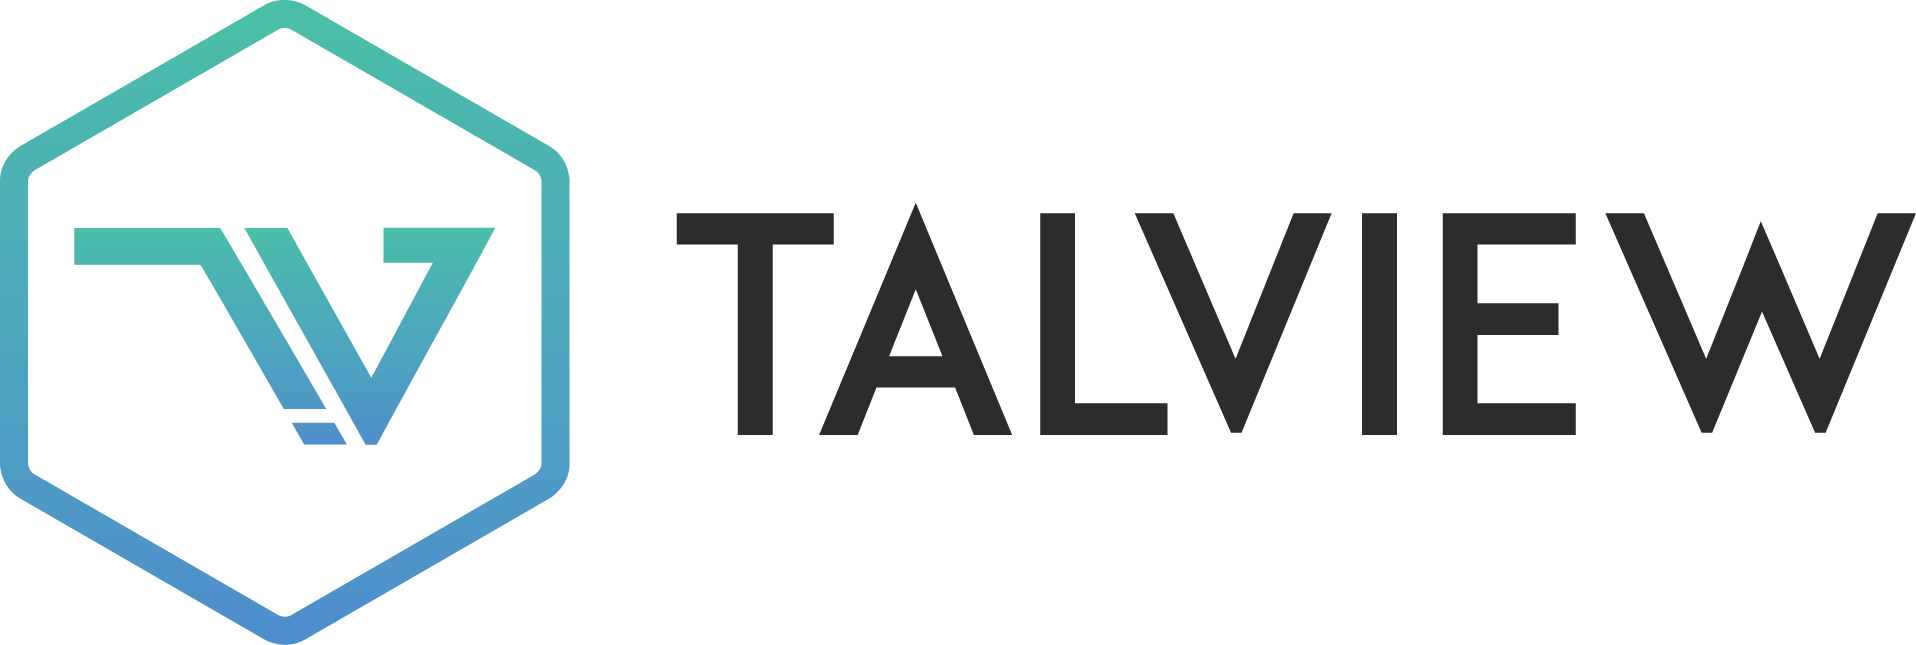 talview green logo 2017